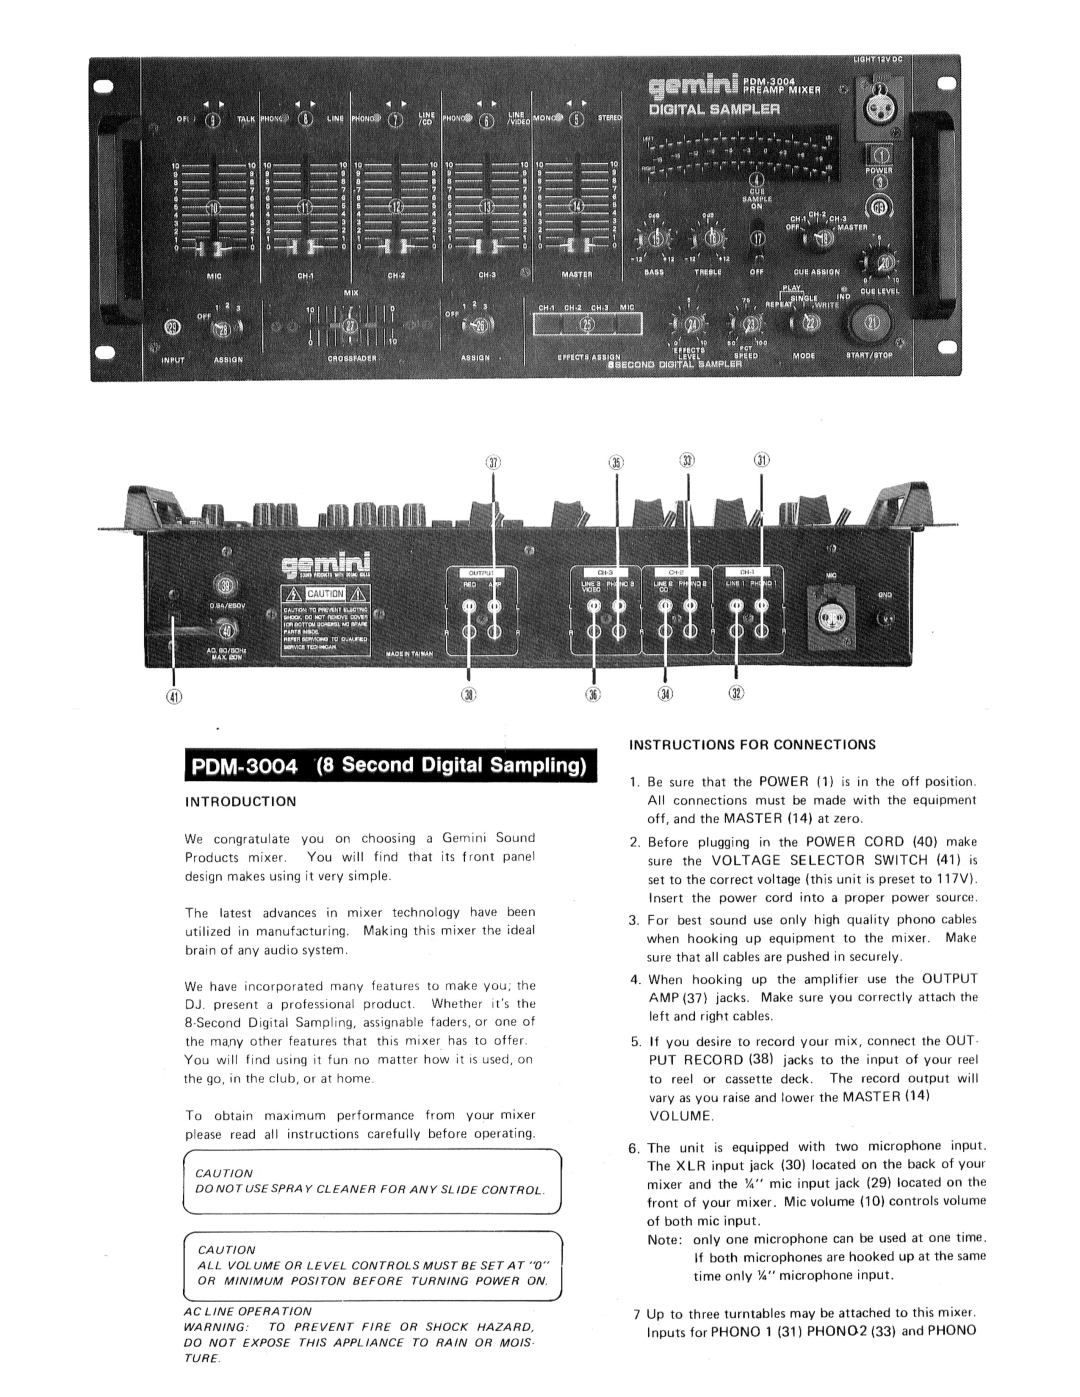 Gemini PDM-3004 manual 